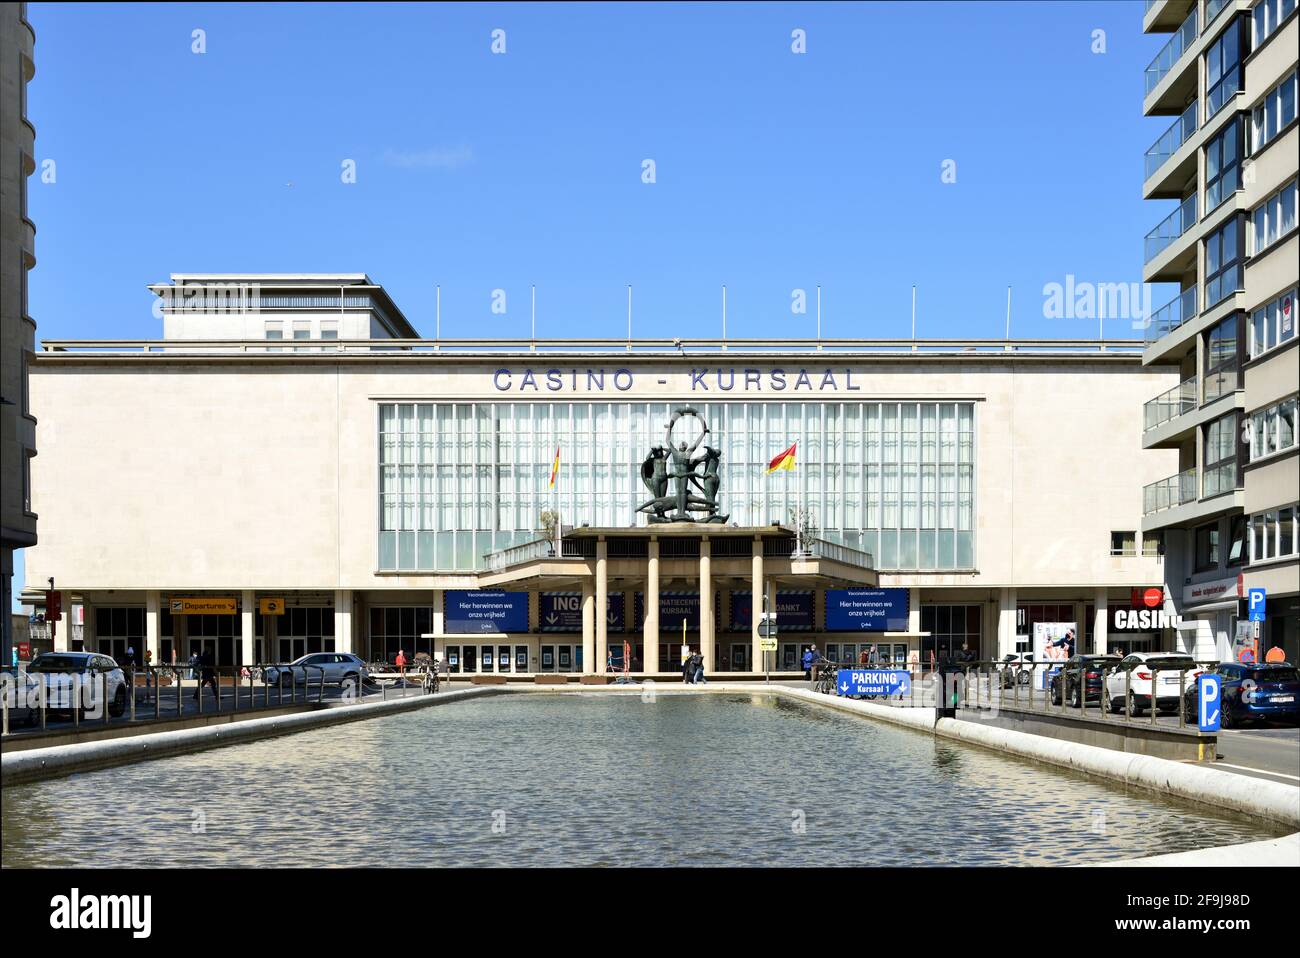 Ostende, Flandre Occidentale Belgique 17 avril 2021: Casino Kursaal. Ancienne façade du casino rénovée. Banque D'Images